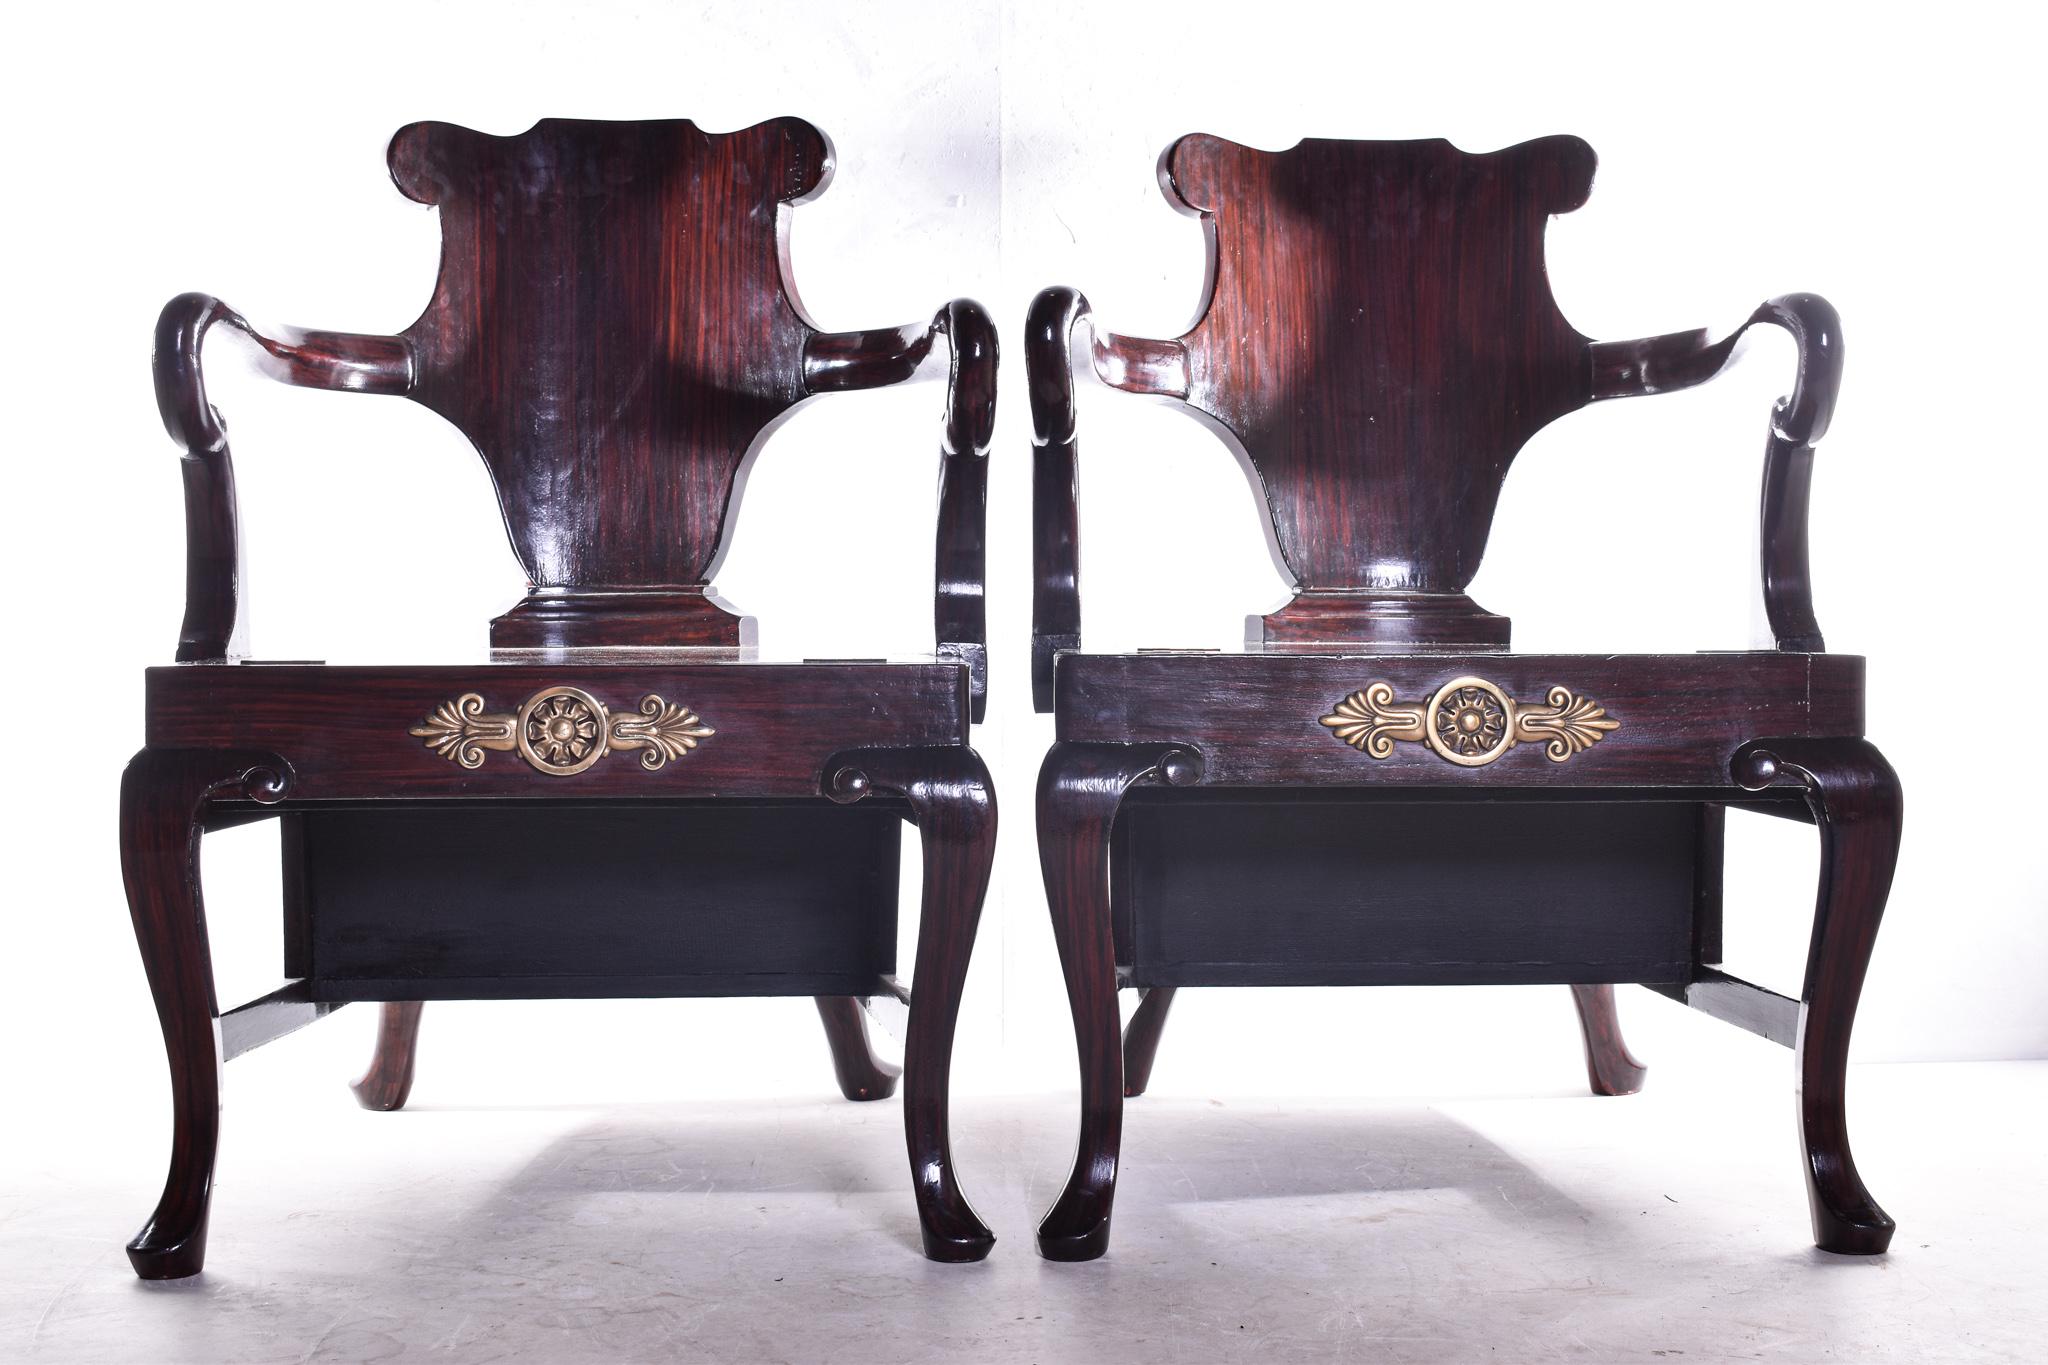 European George II Style Metamorphic Library Chairs